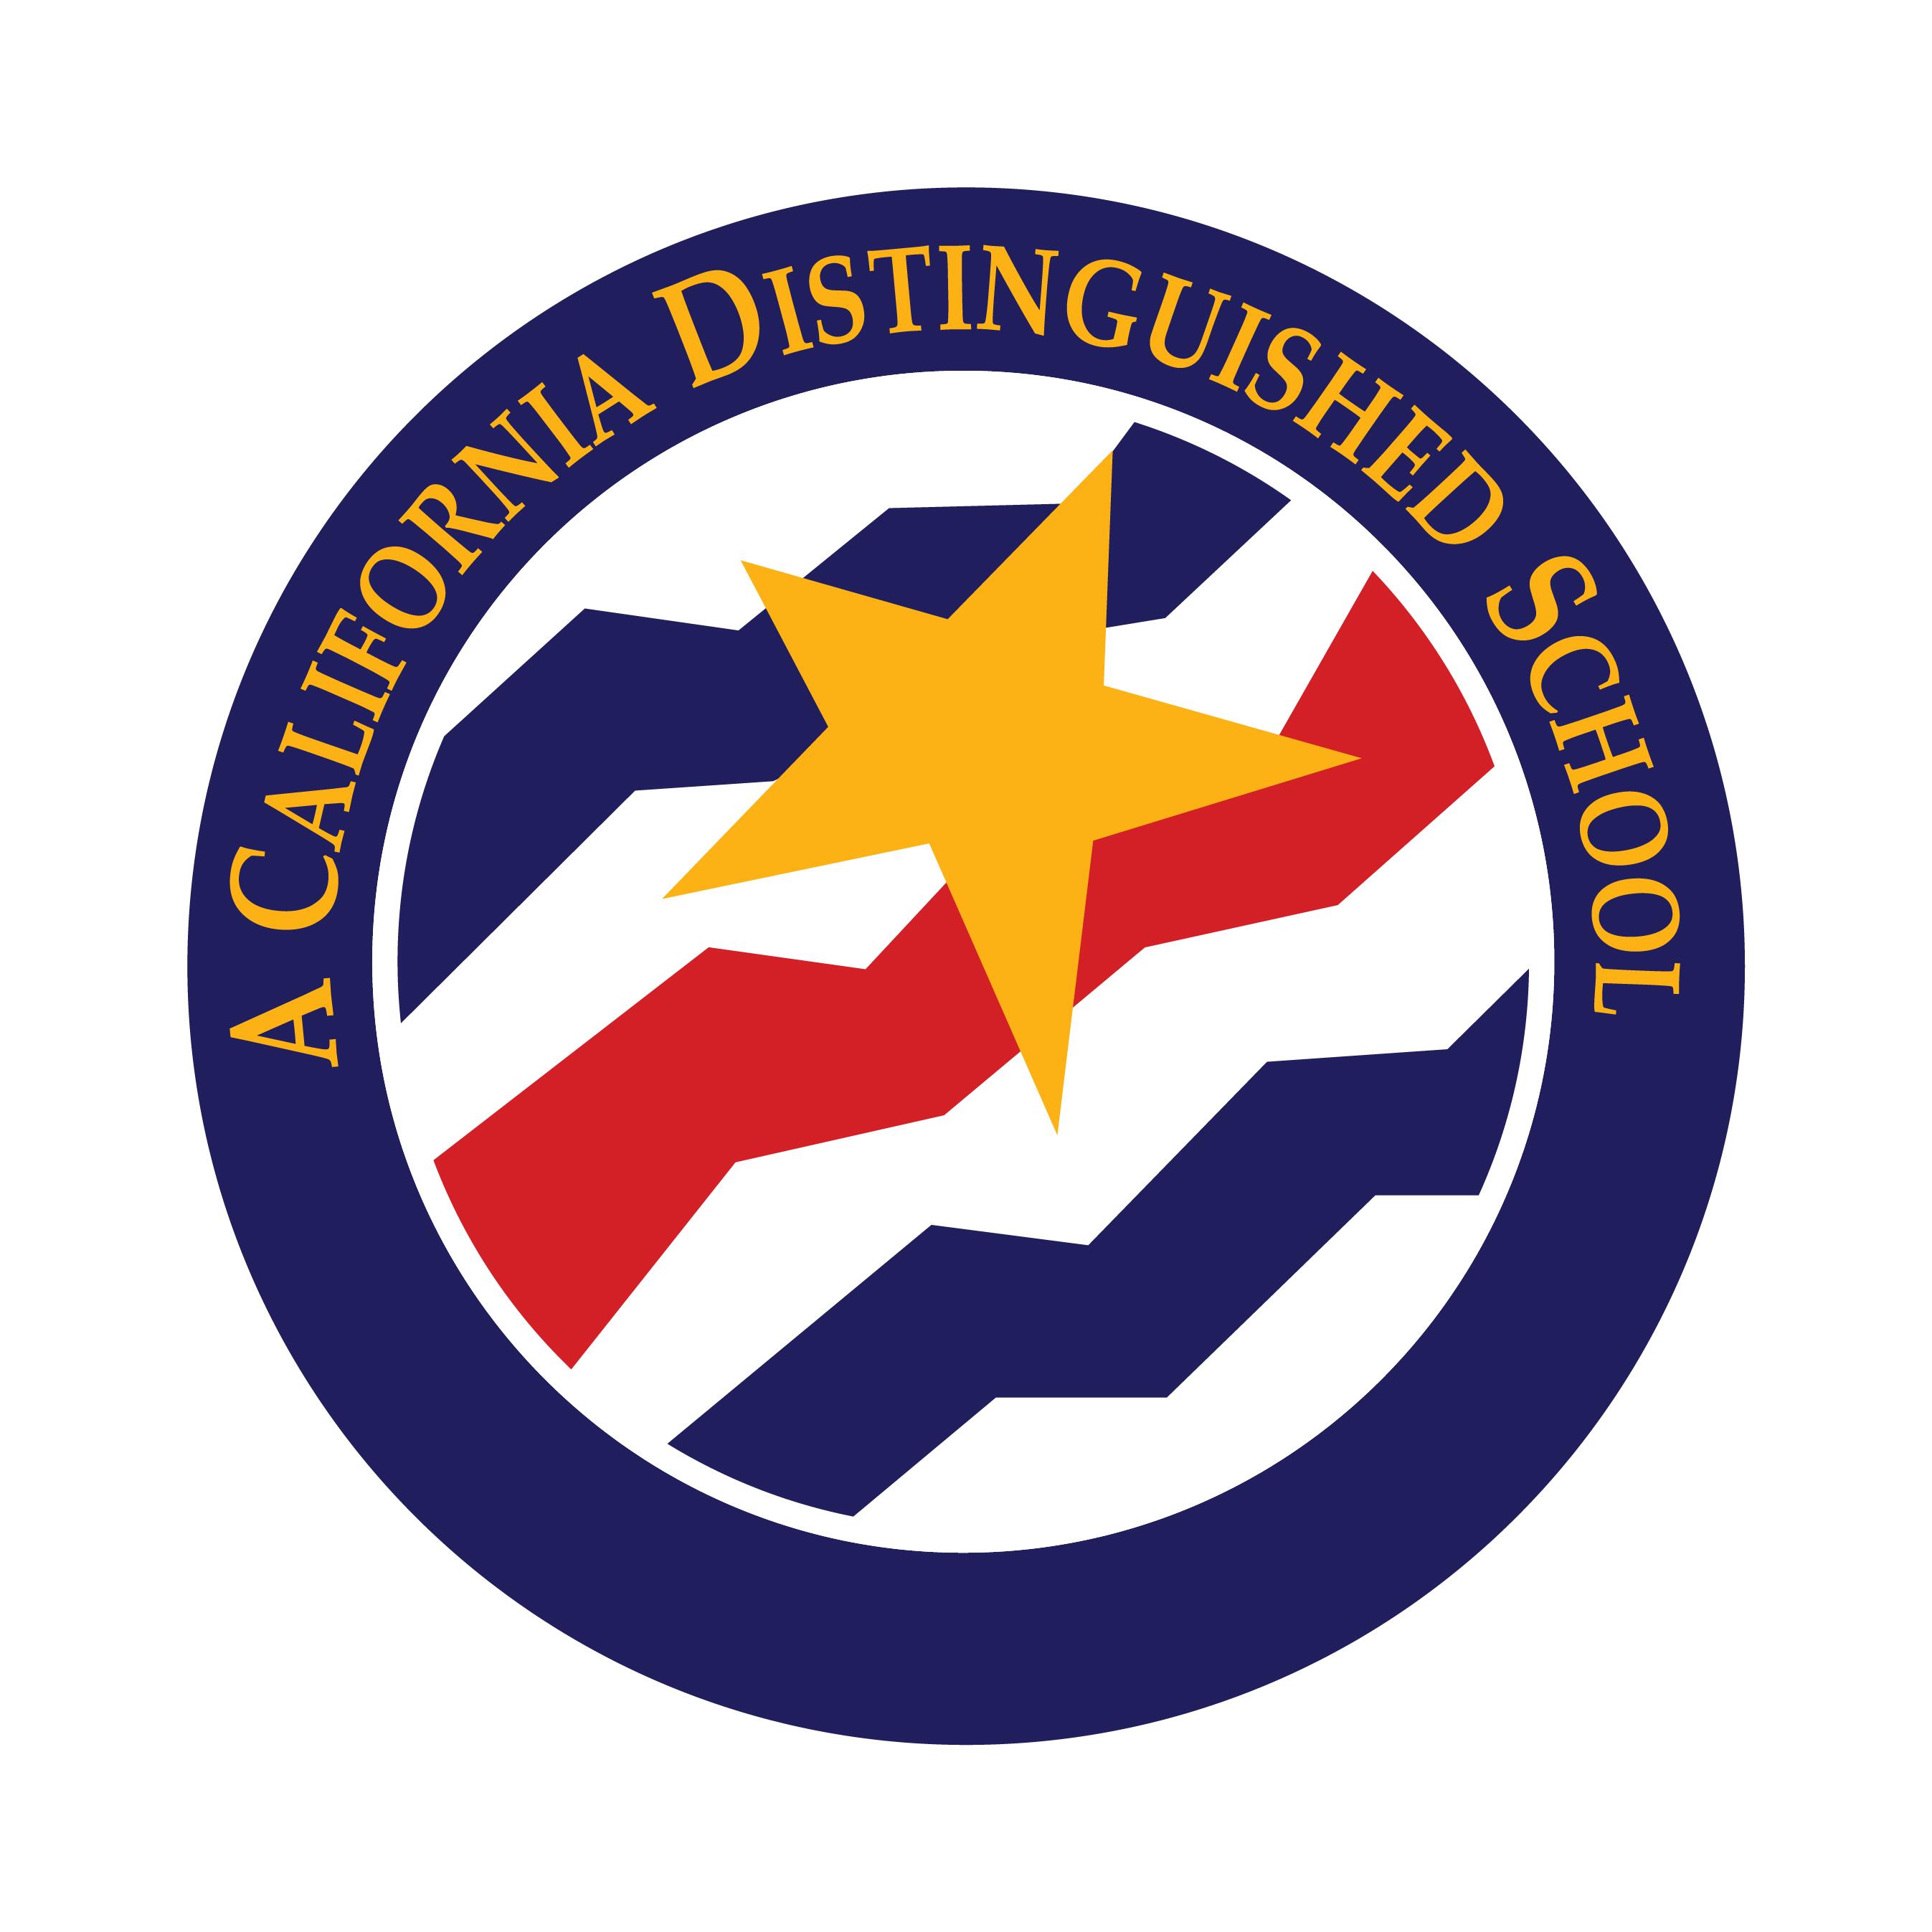 California Distinguished School award